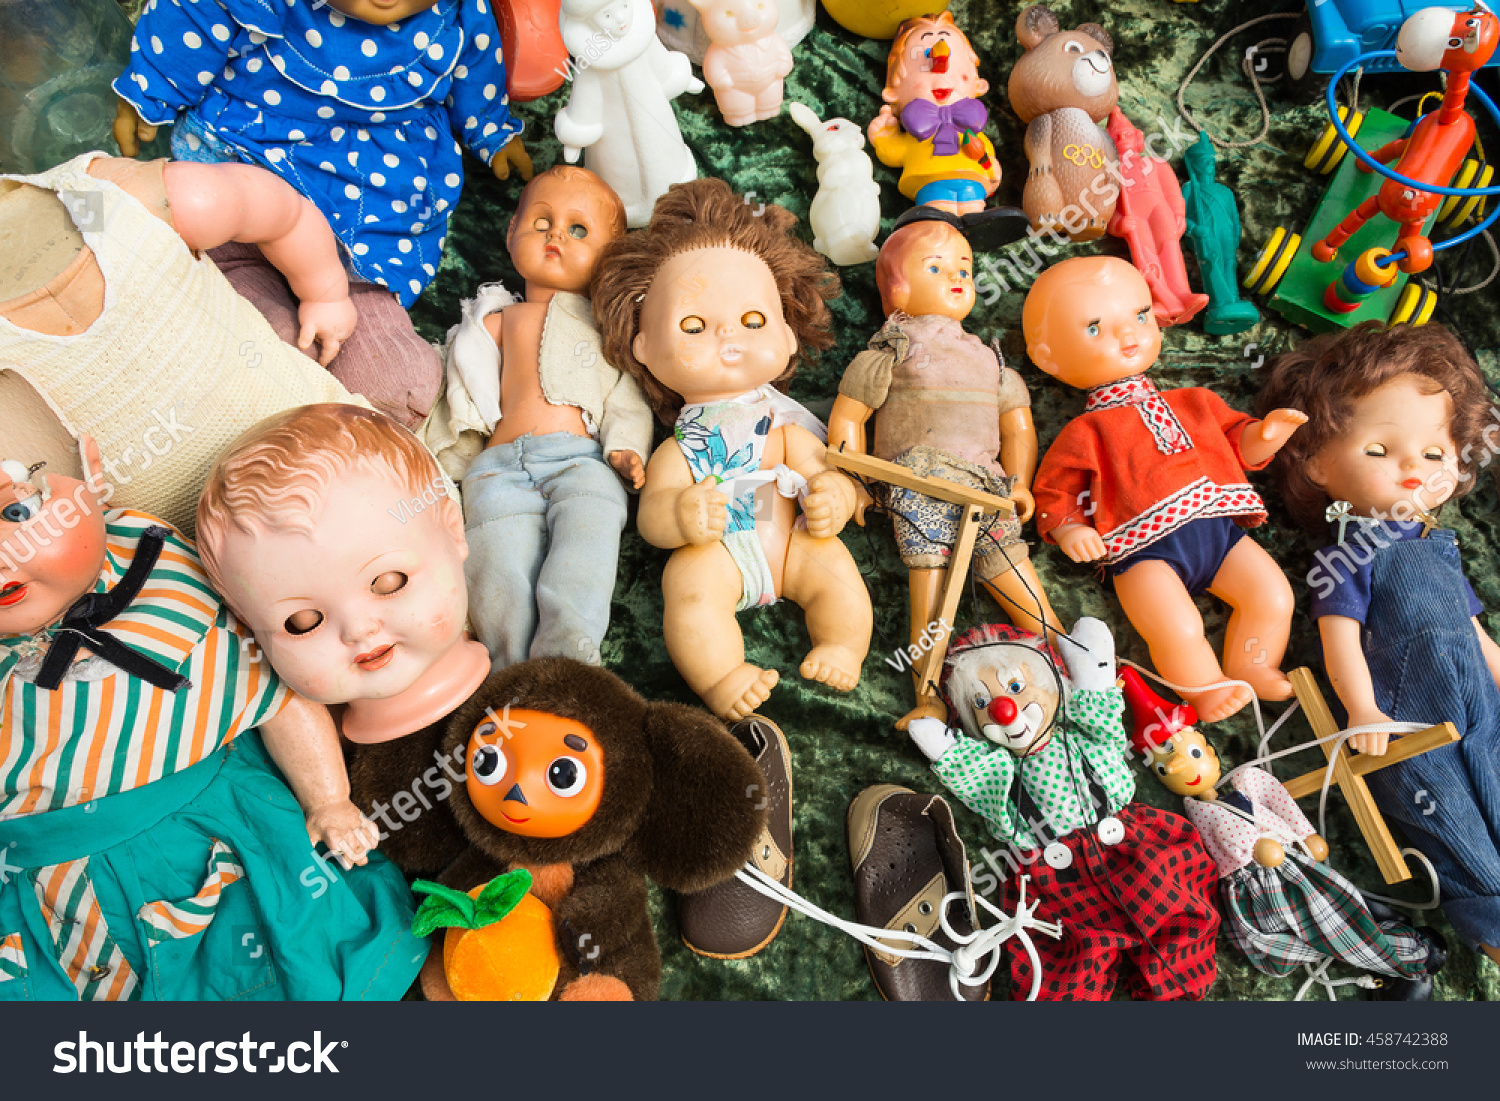 old dolls for sale